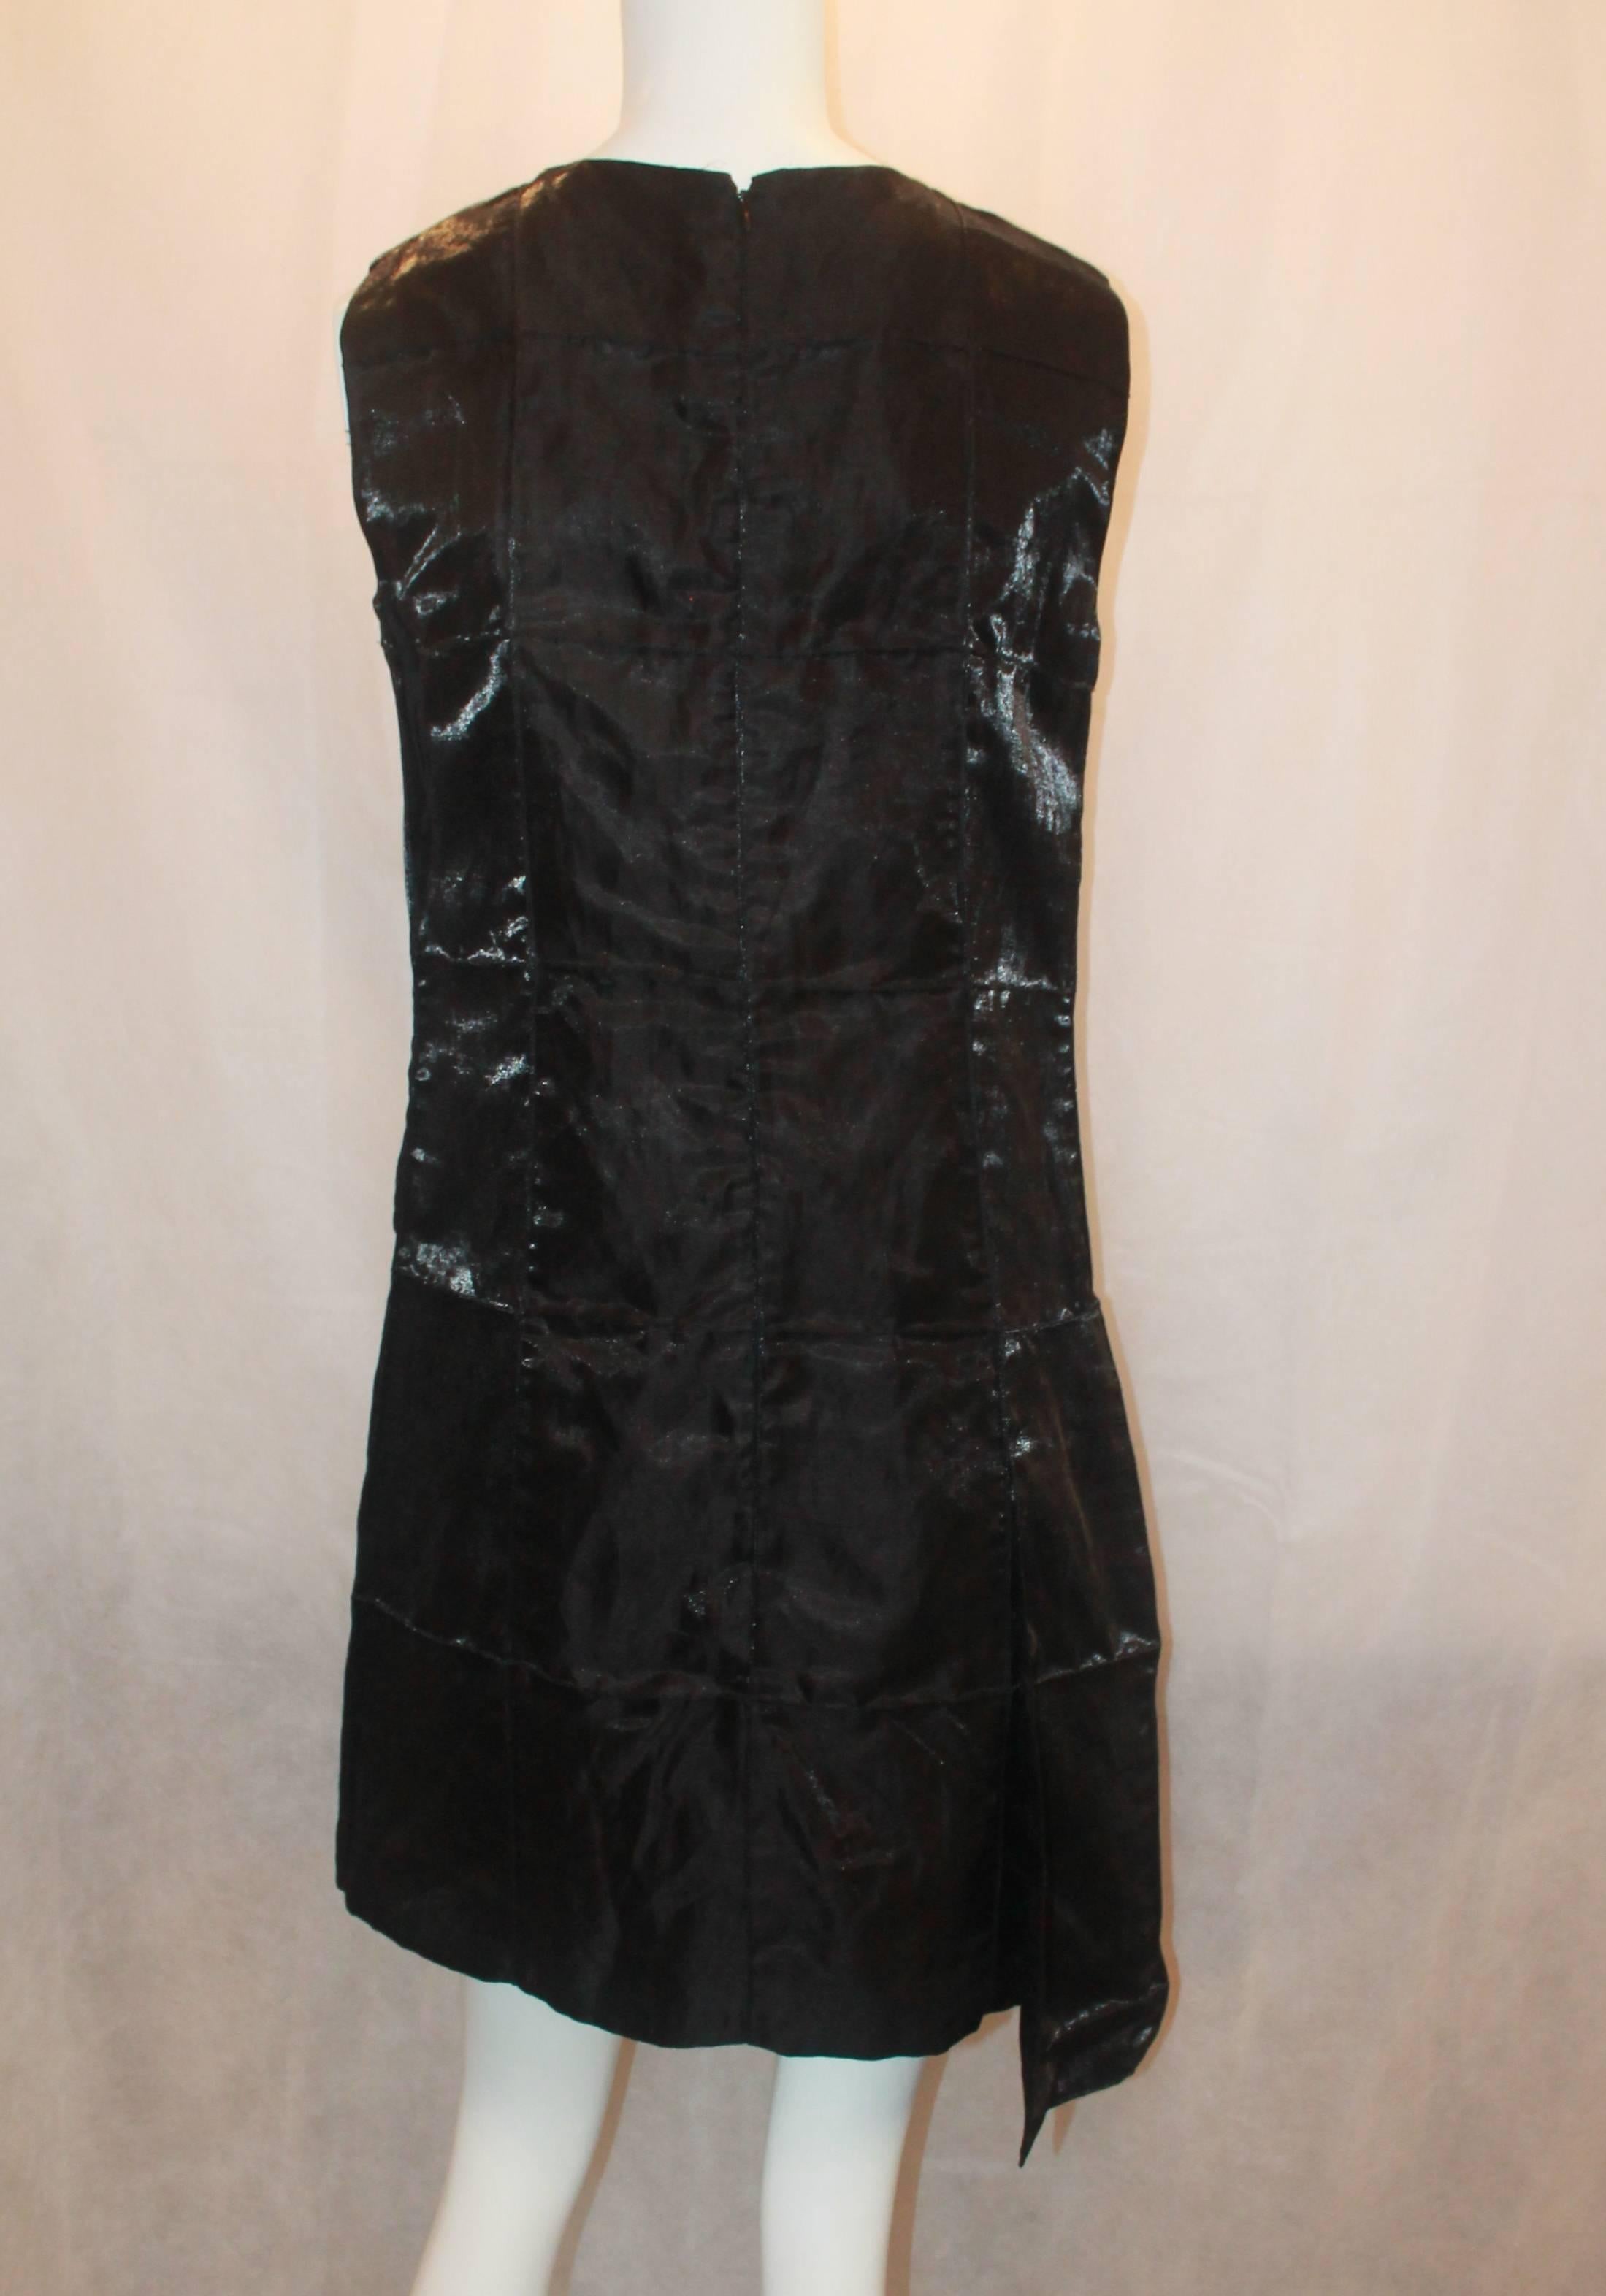 Women's Chanel Black Metallic Quilted Asymmetrical Shift Dress - 40 - 1999